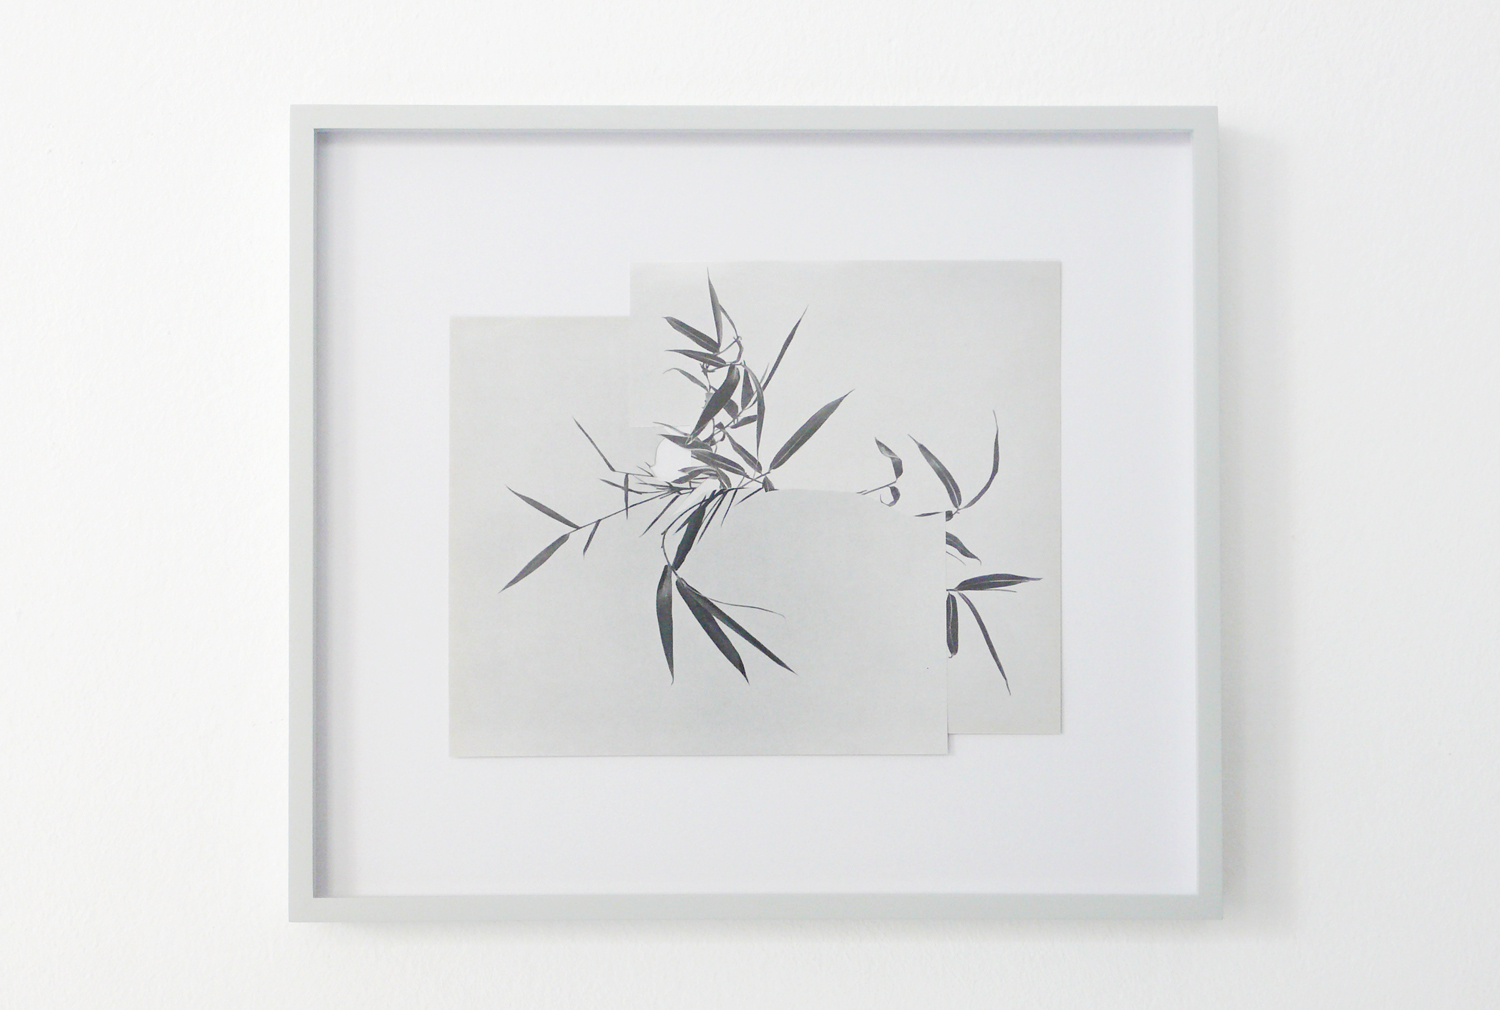   Shape/ khazri,  2014, paper, glue, 26,3 x 30cm 